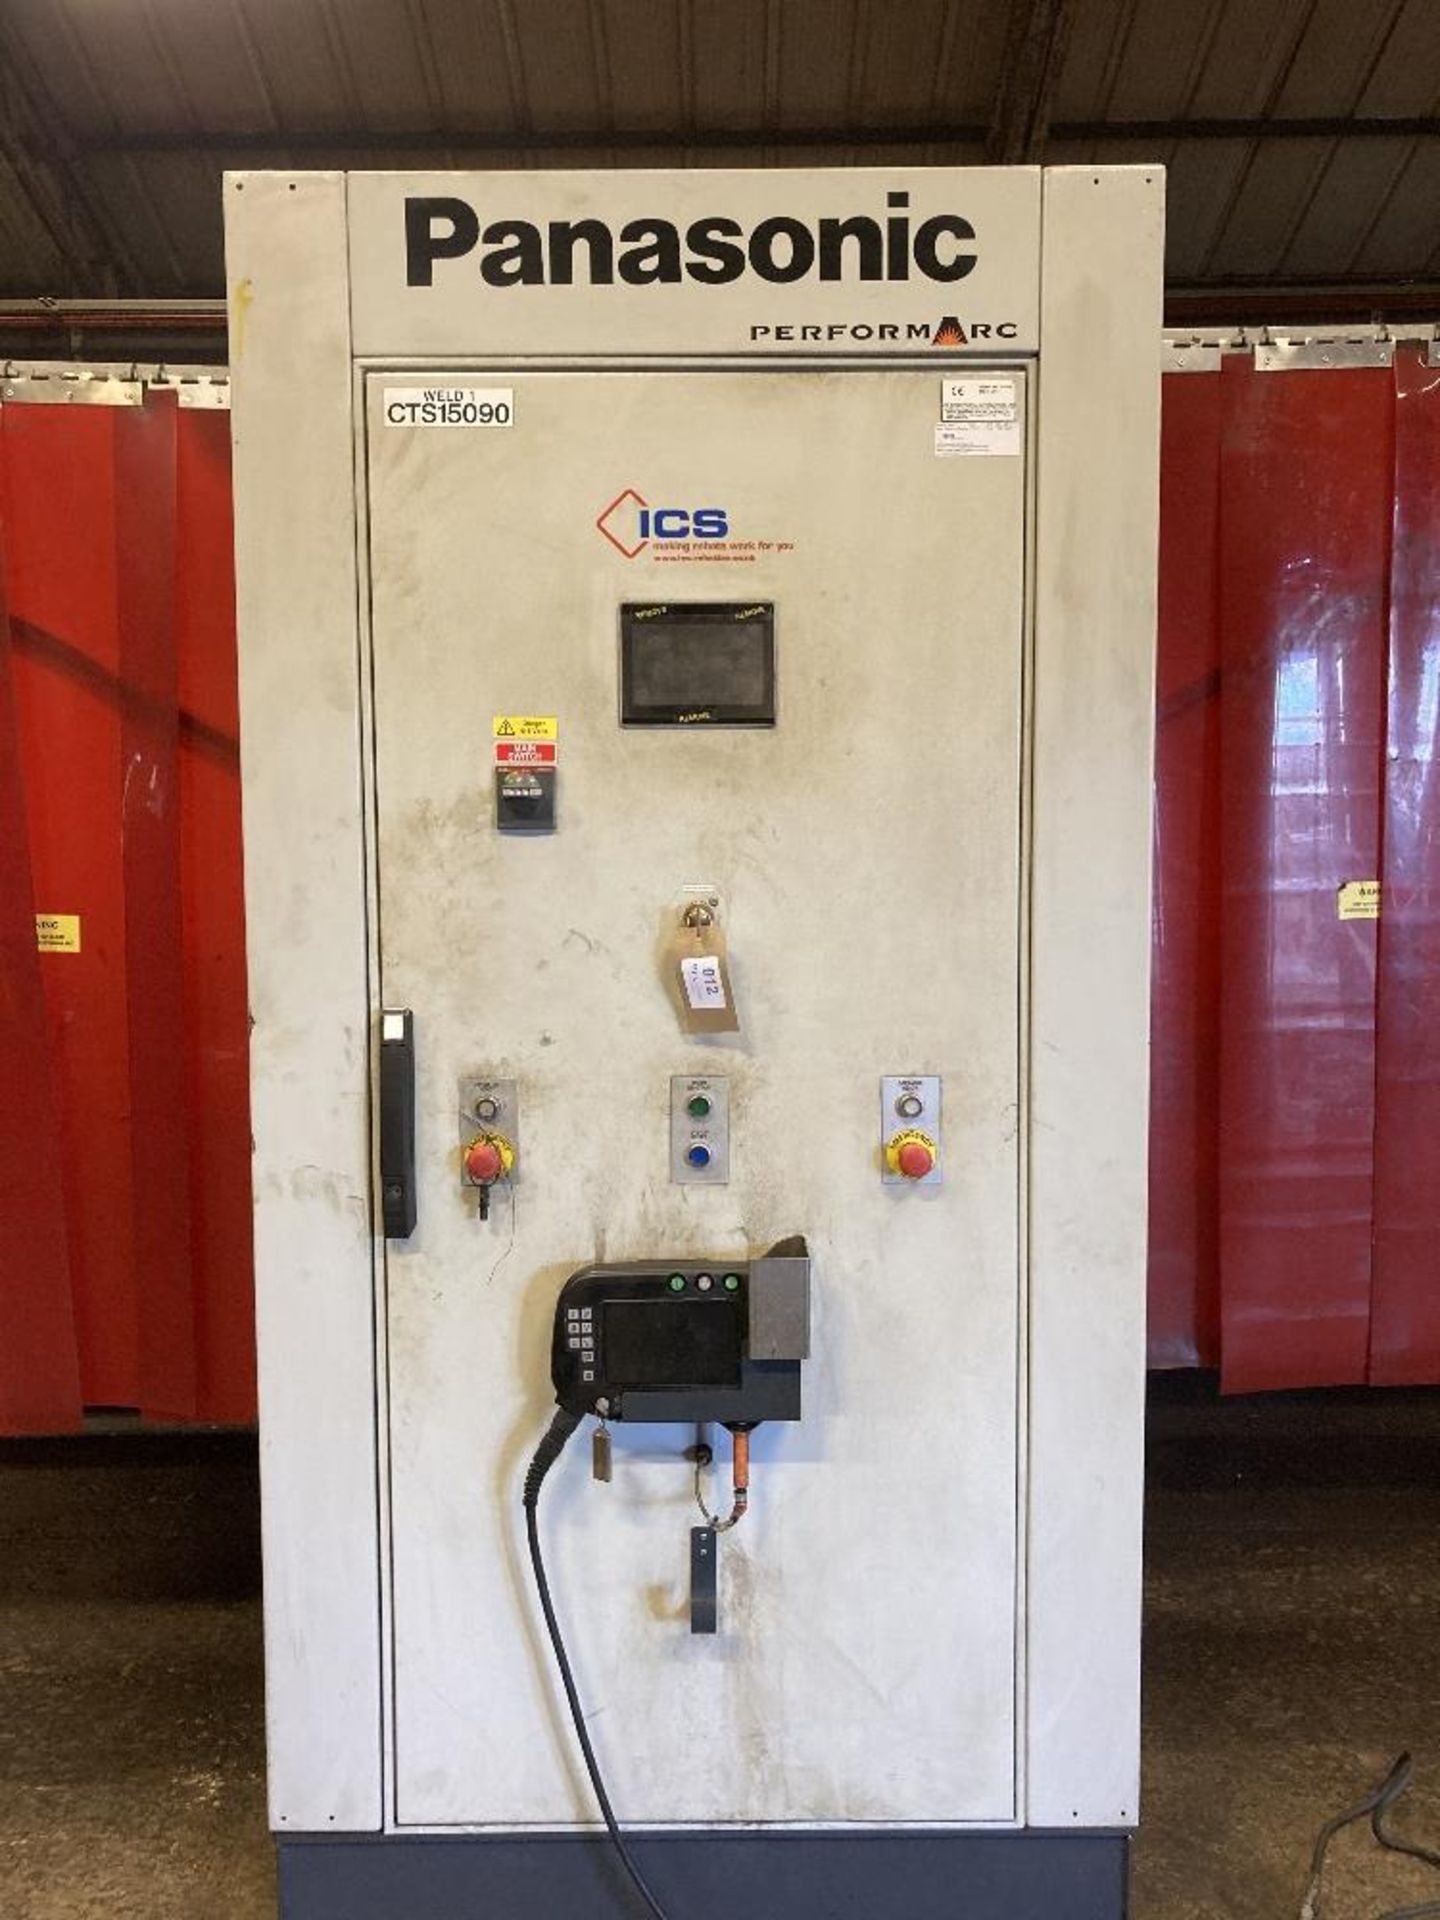 Panasonic Performance robotic welding machine - Image 2 of 14